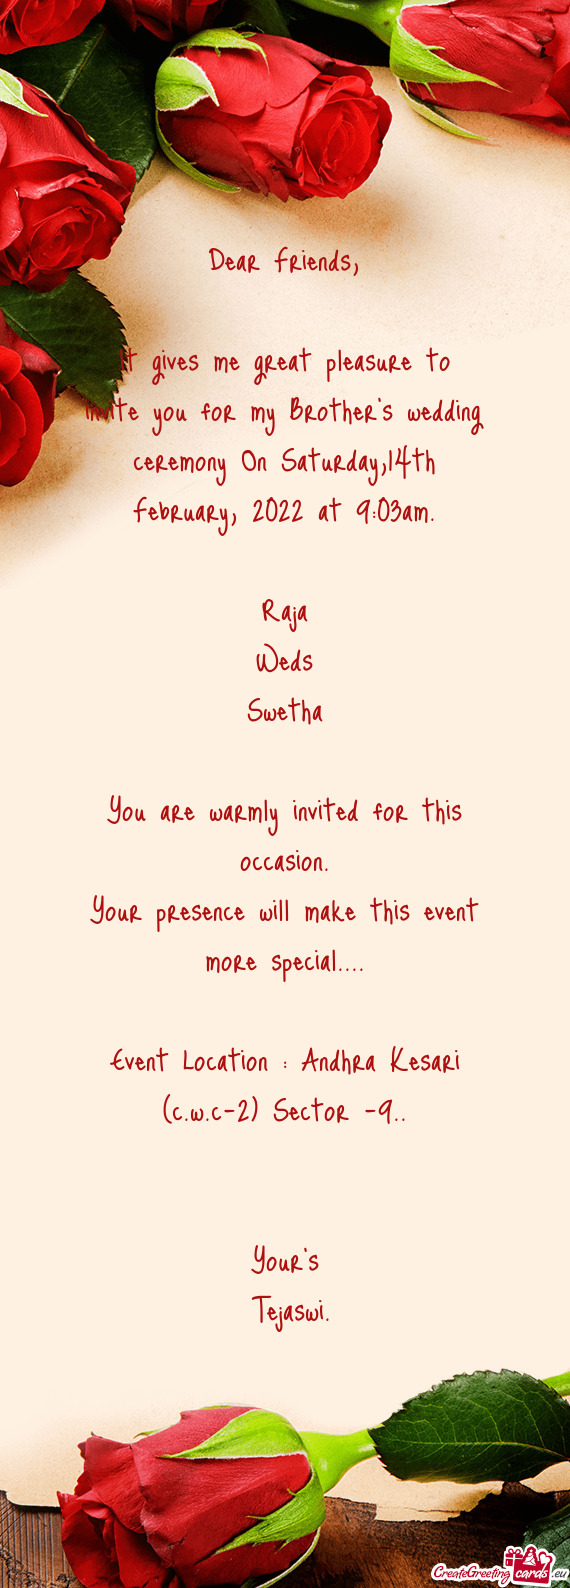 Event Location : Andhra Kesari (c.w.c-2) Sector -9